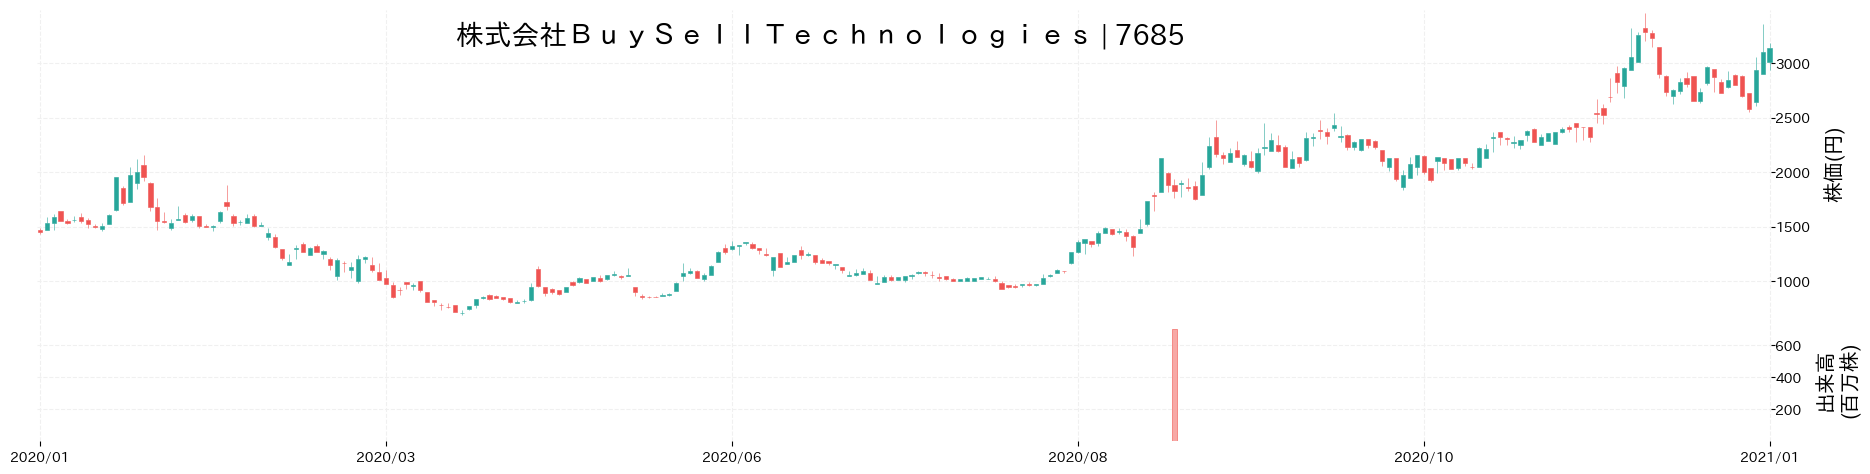 BuySell Technologiesの株価推移(2020)